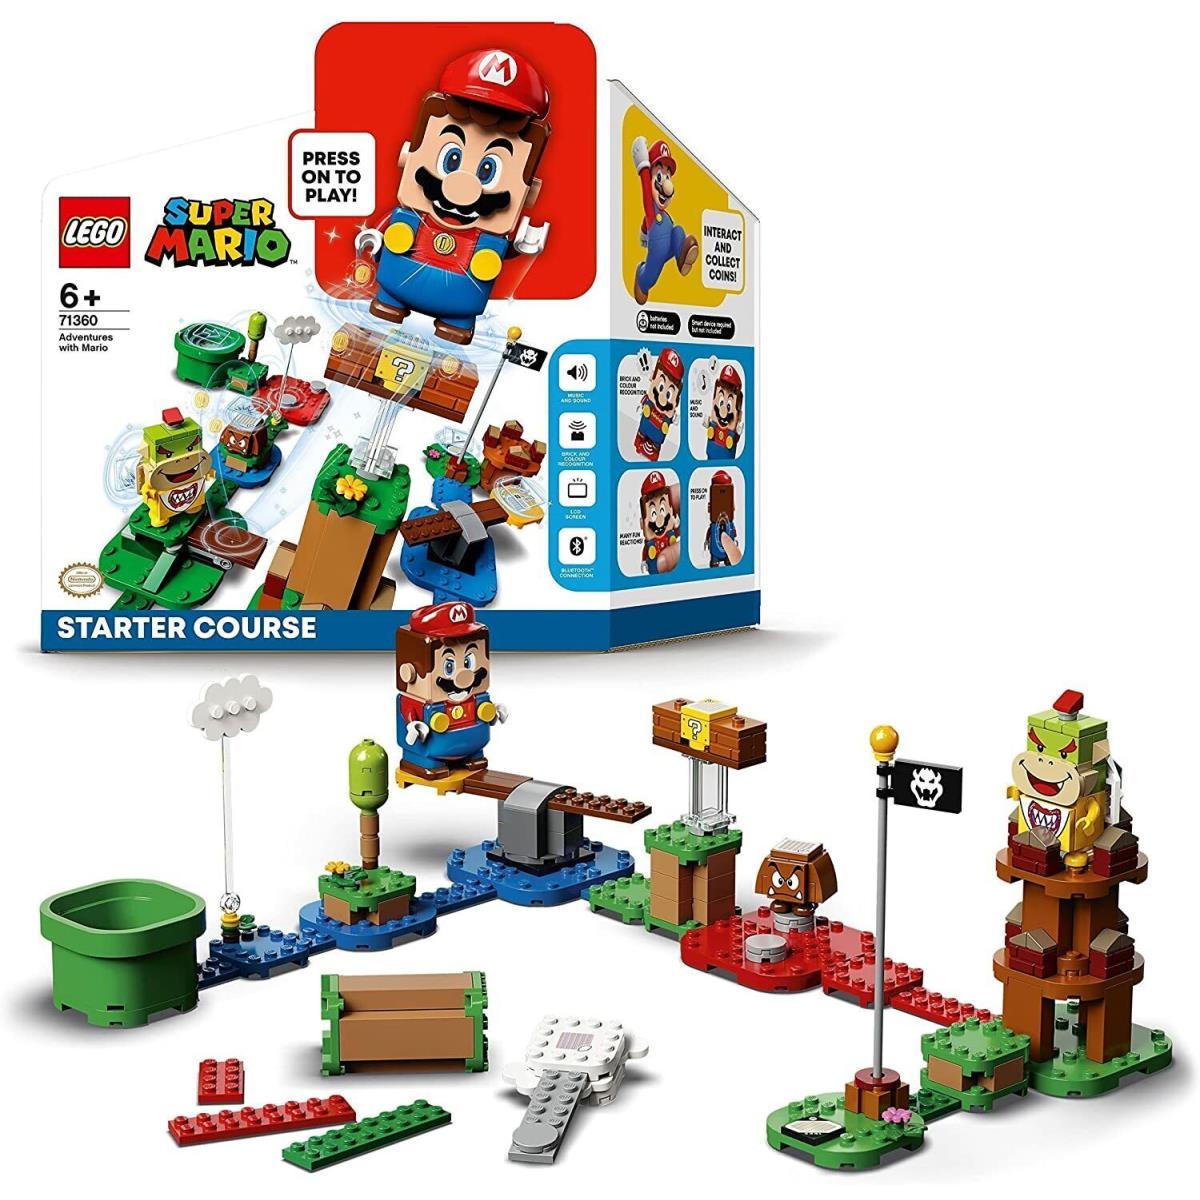 Lego 71360 Super Mario Adventures with Mario Starter Course 231 Pieces